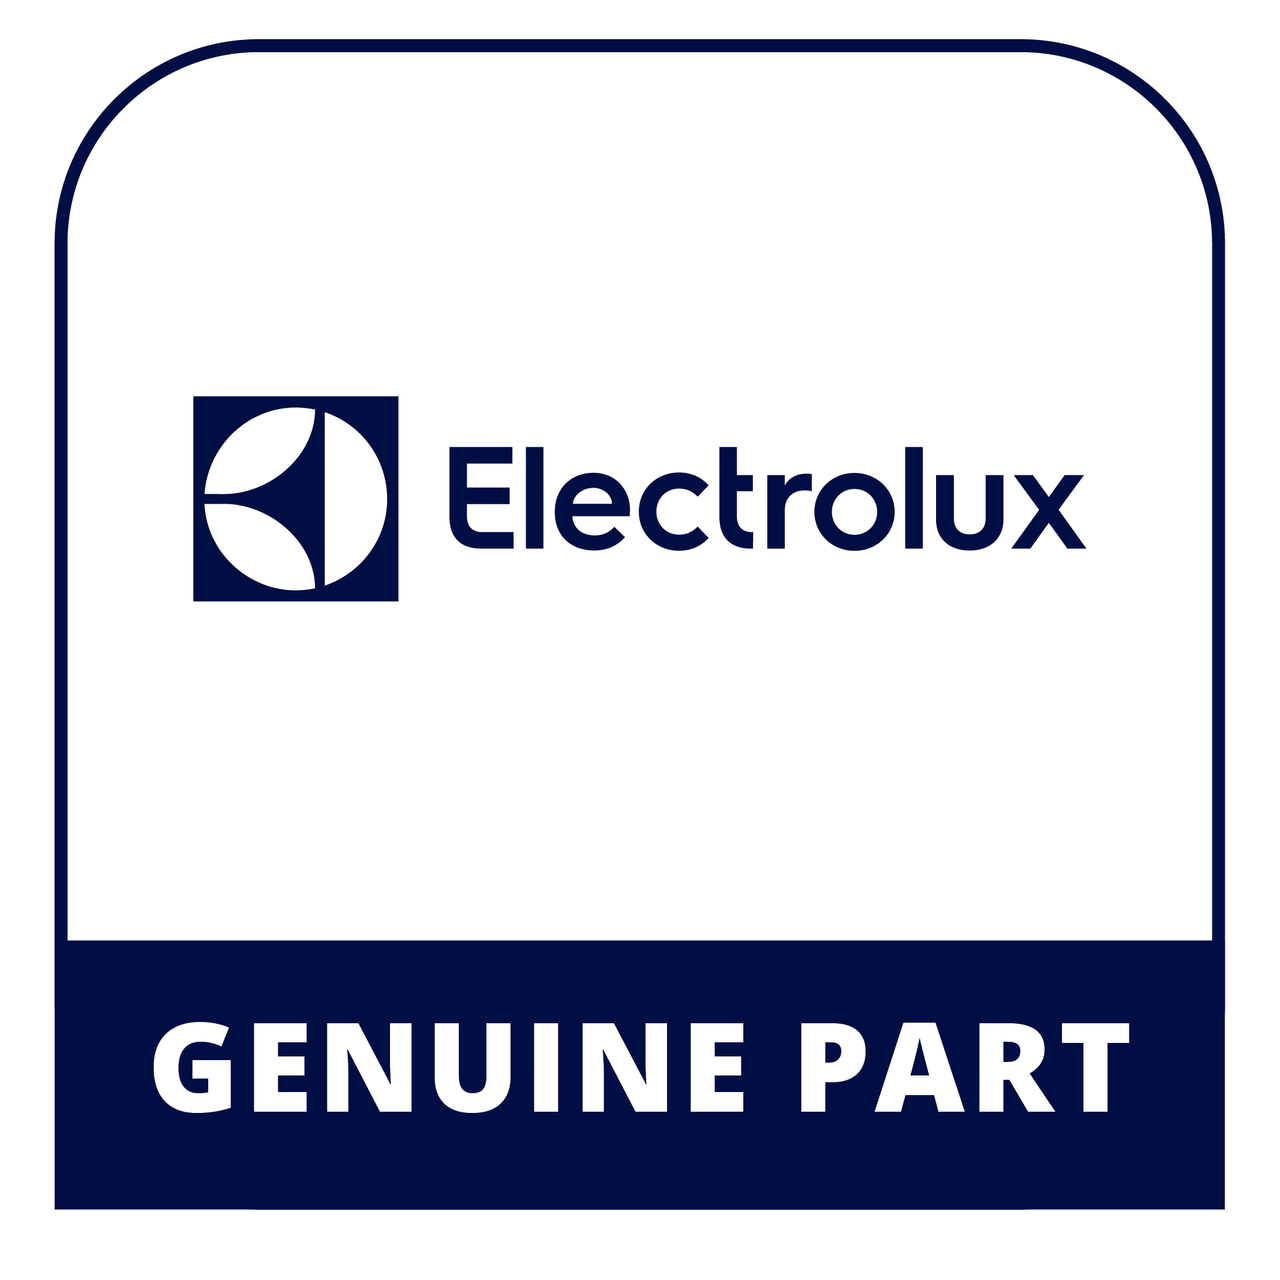 Frigidaire - Electrolux 316605357 Panel - Genuine Electrolux Part